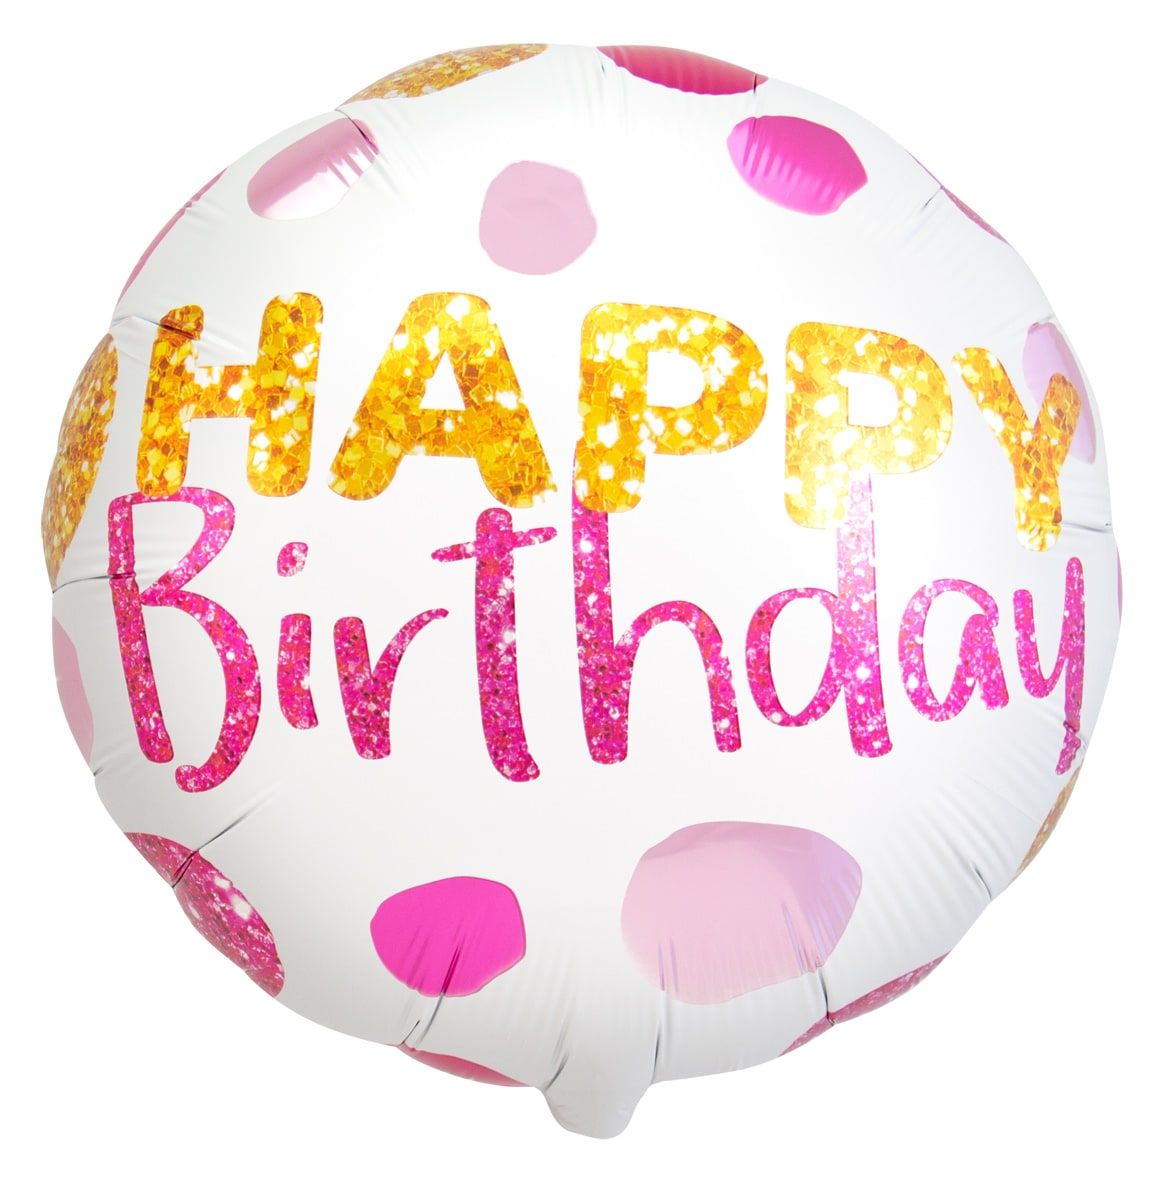 Feestelijke verjaardag folieballon stippen roze